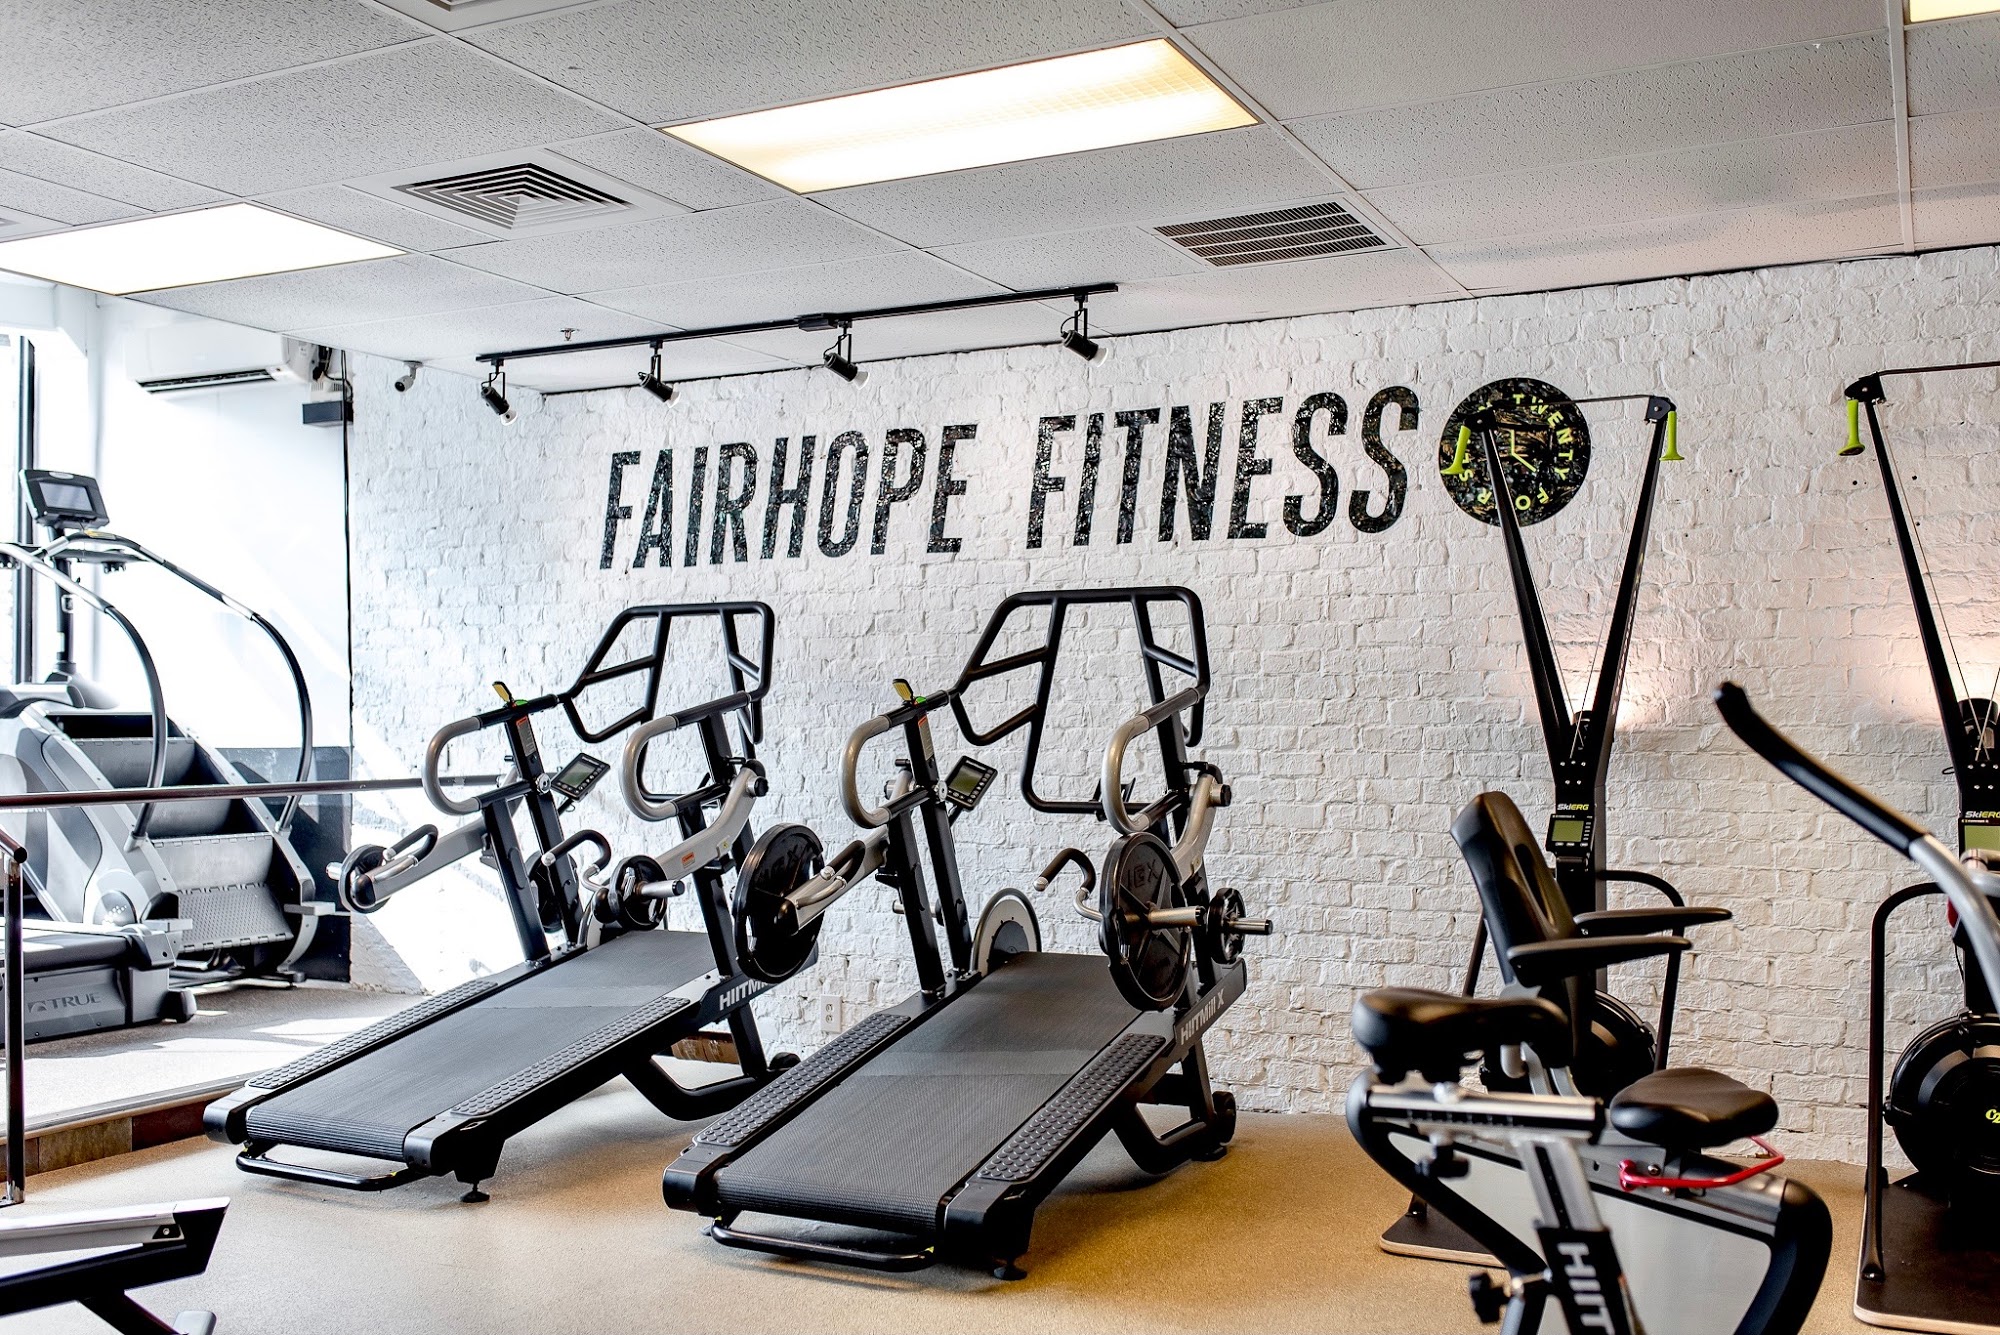 Fairhope Fitness 24